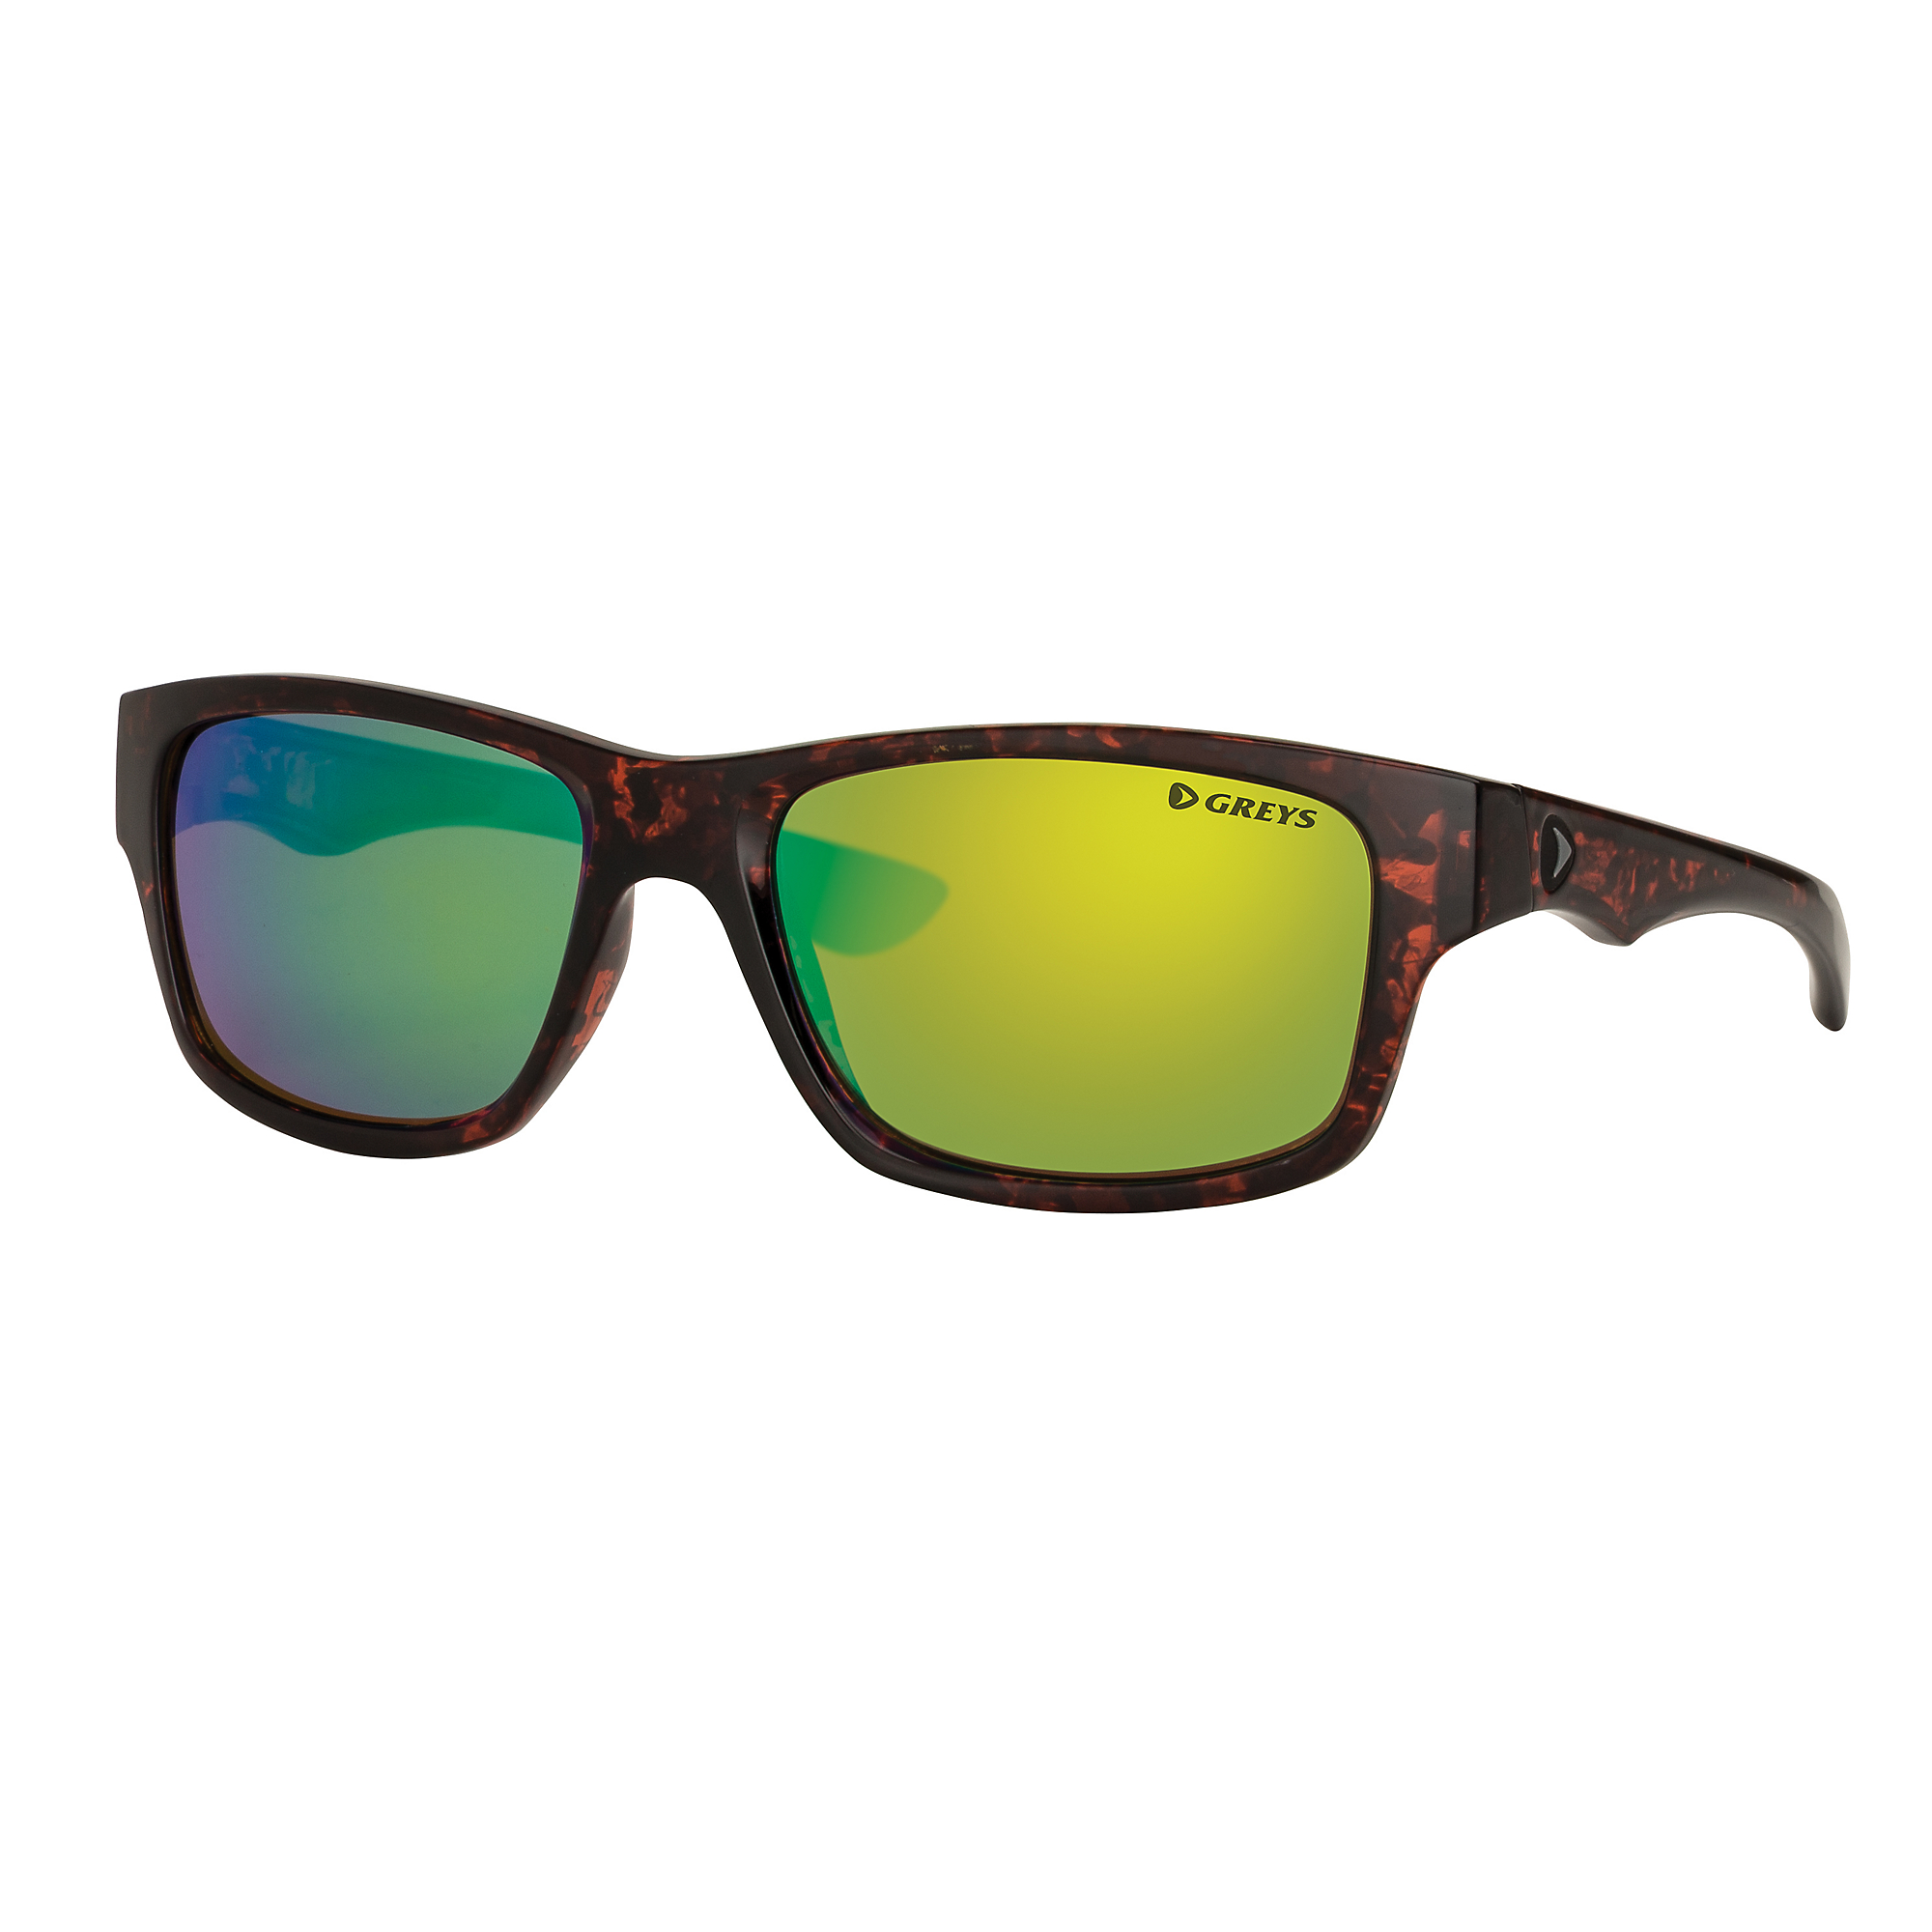 Greys G4 Sunglasses (Gloss Tortoise/Green Mirror) 1443841.jpg